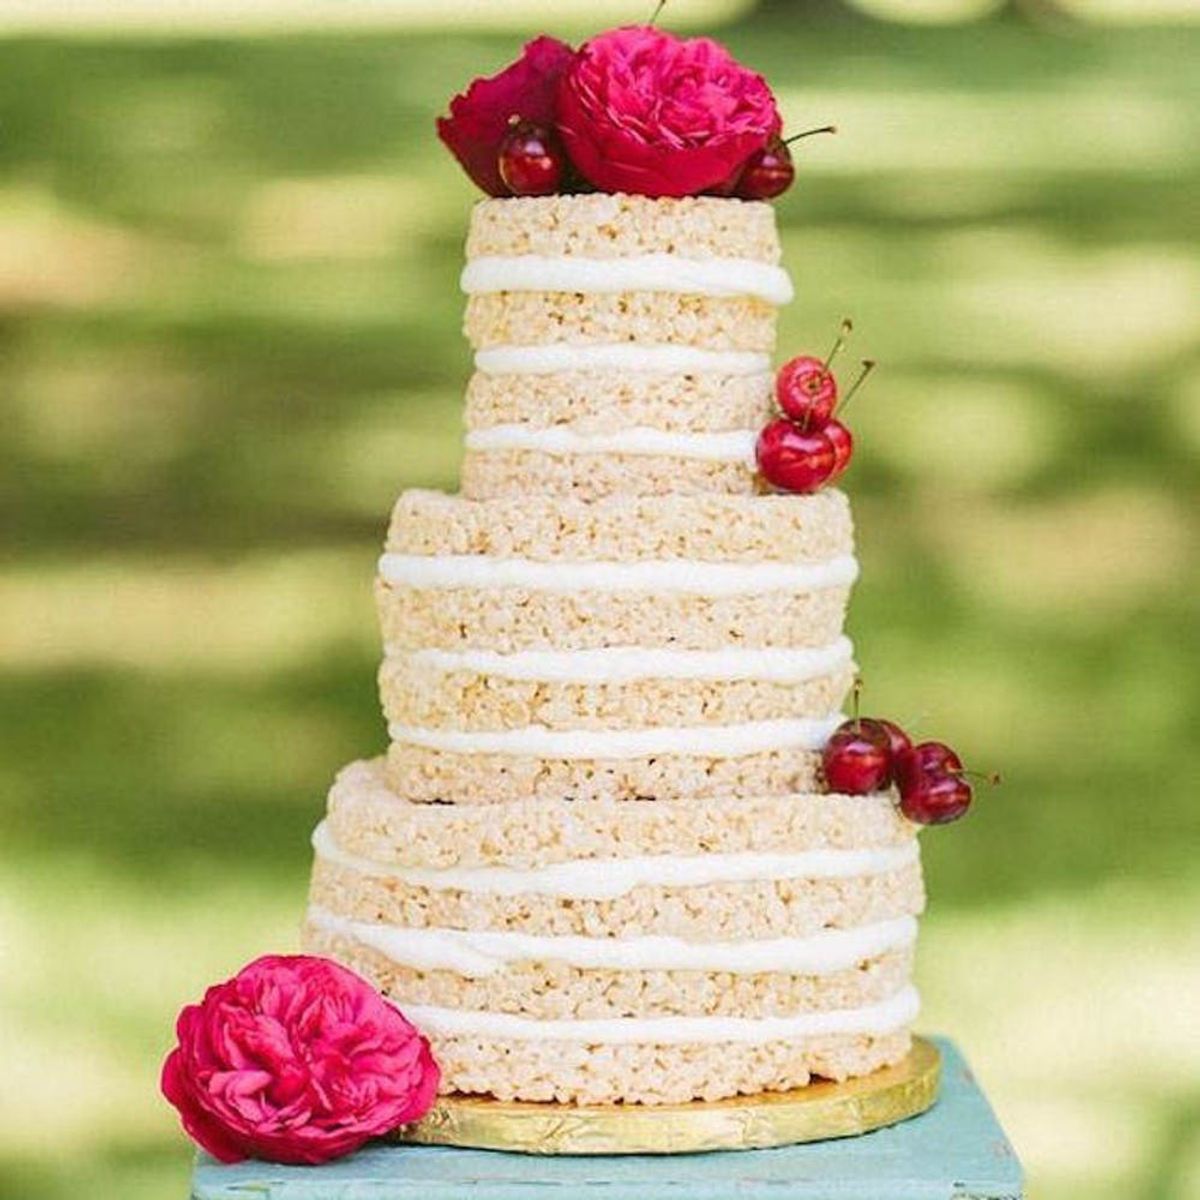 13 Alternative Wedding Cake Ideas